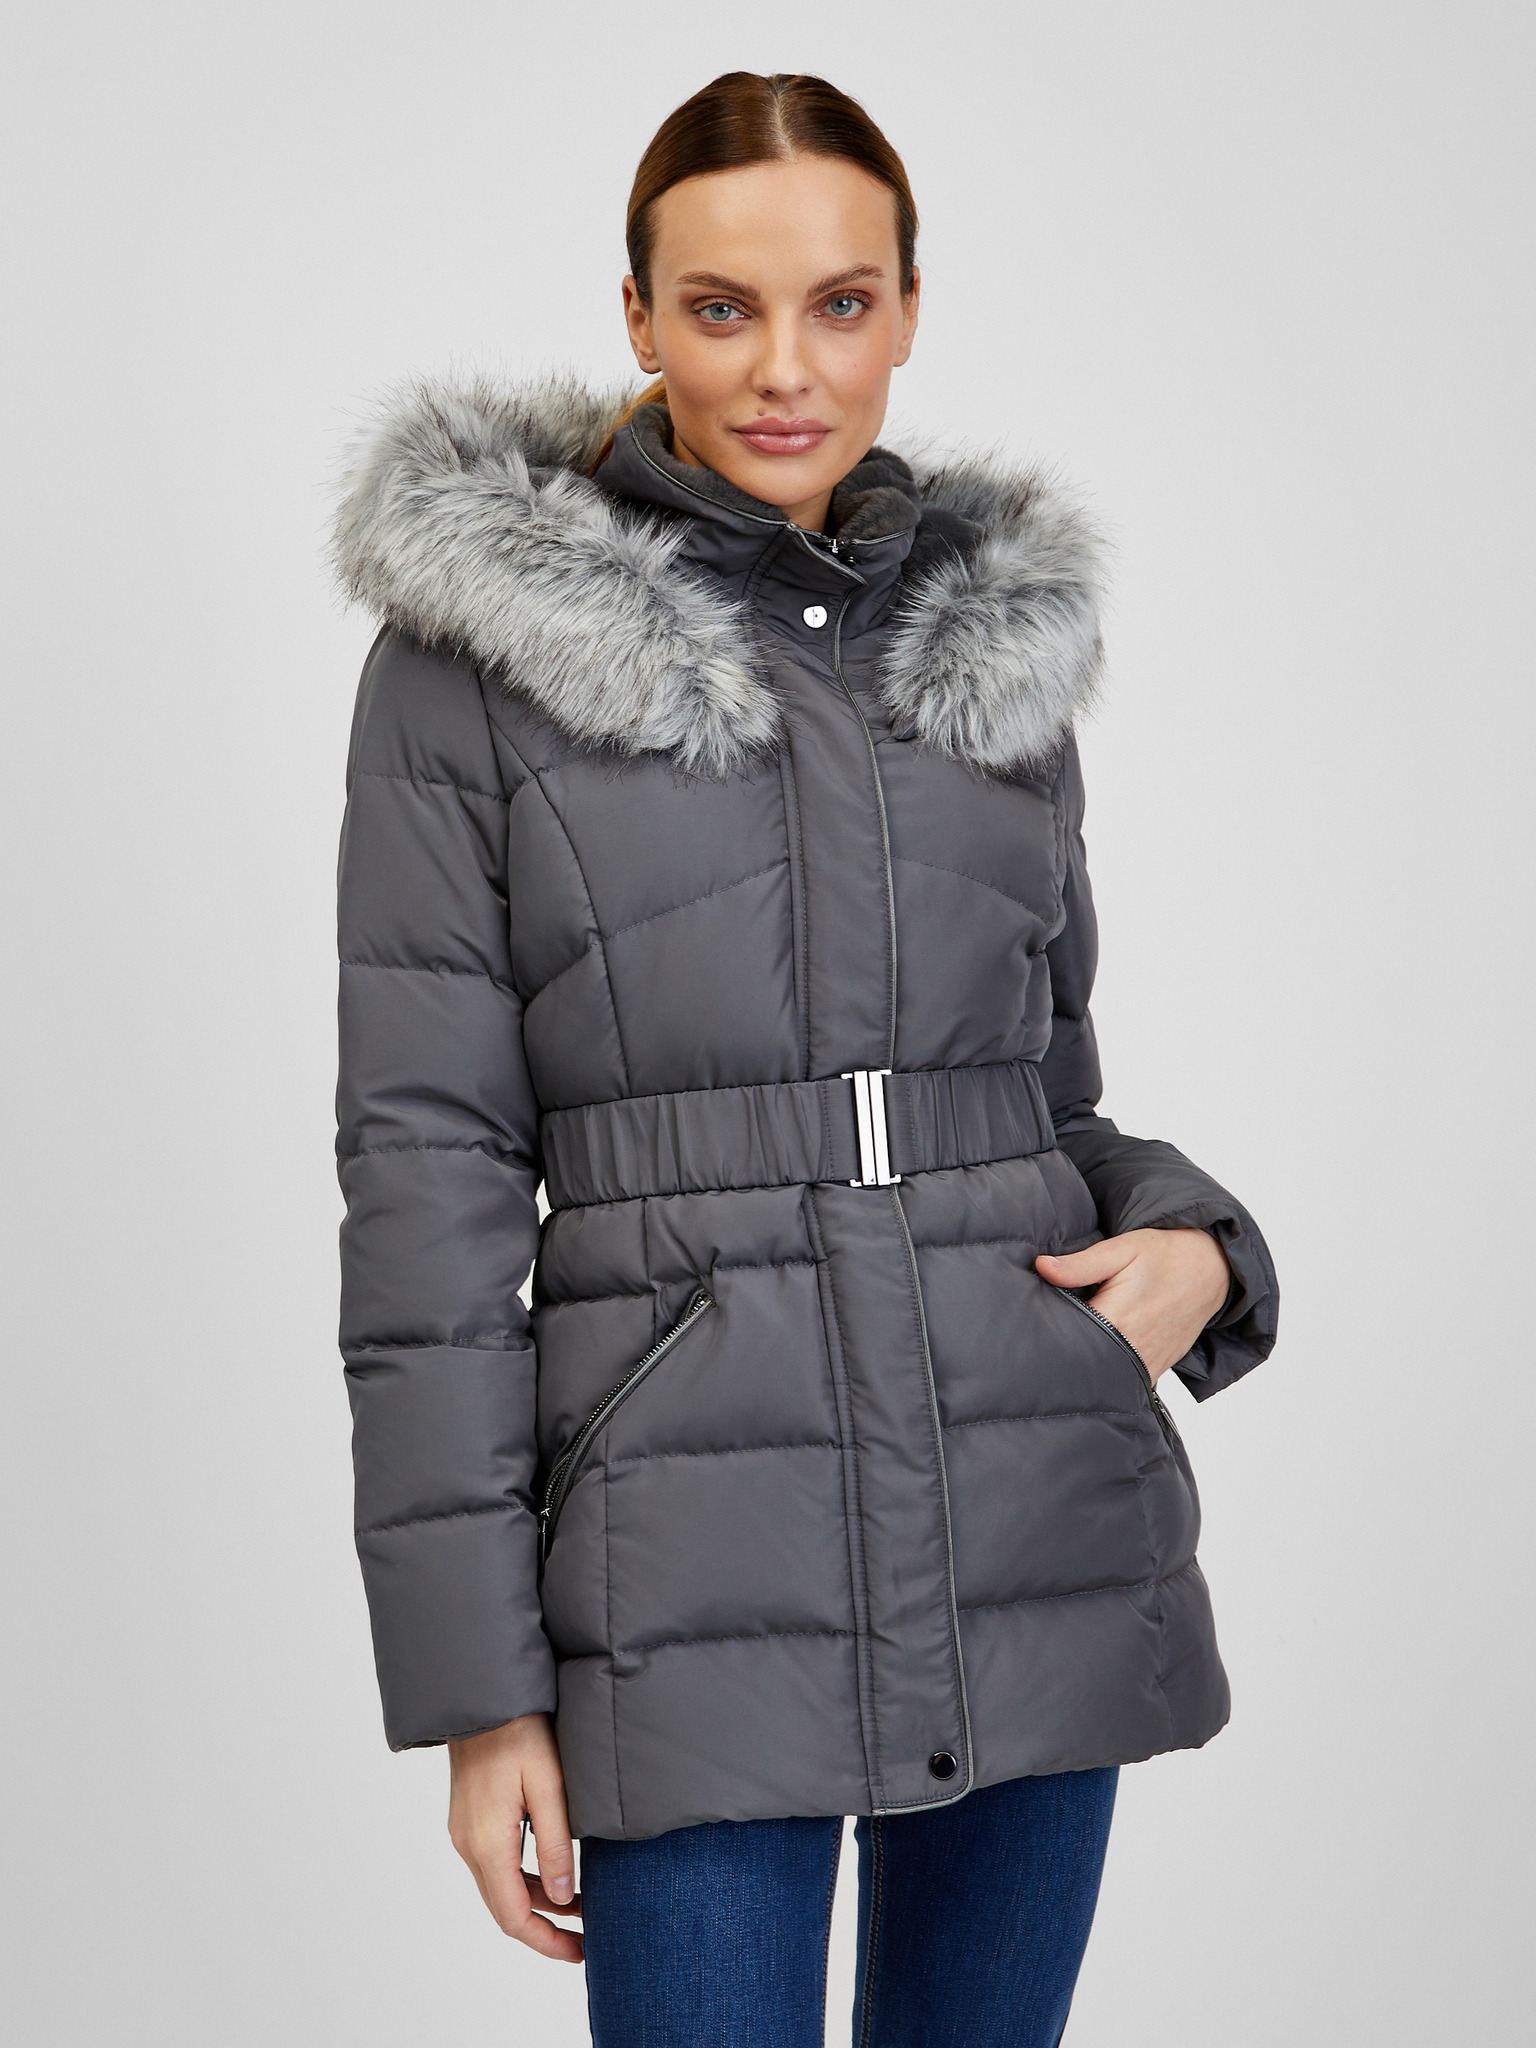 Orsay - Winter jacket